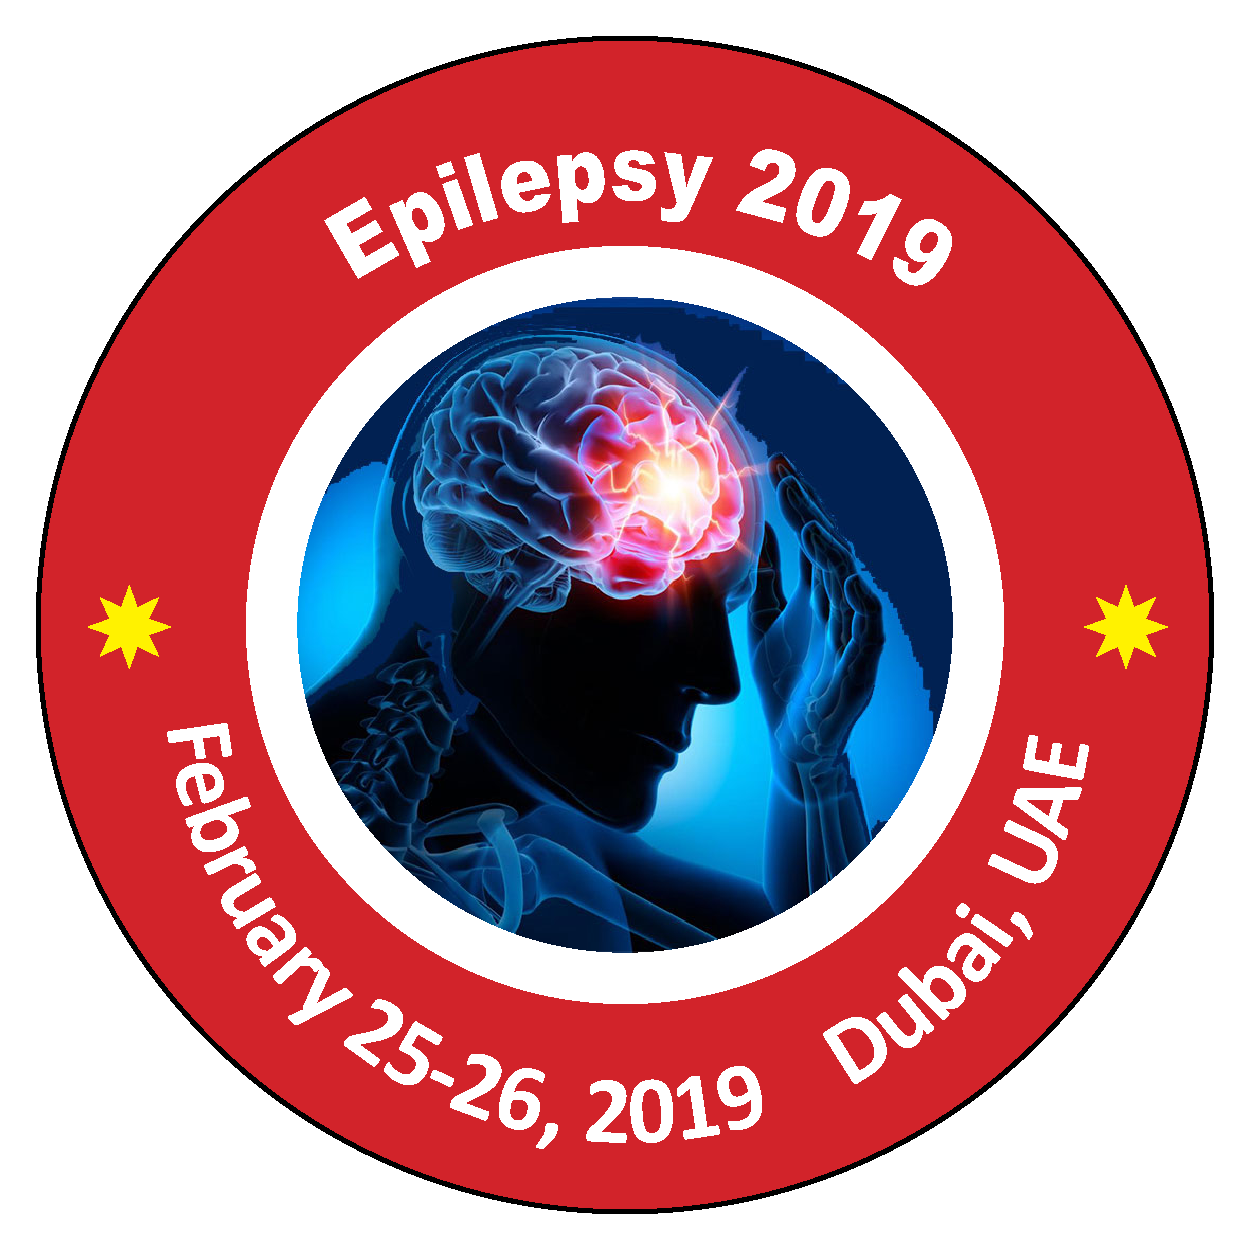 Photos of 3rd World Congress on Epilepsy and Neuronal Synchronization